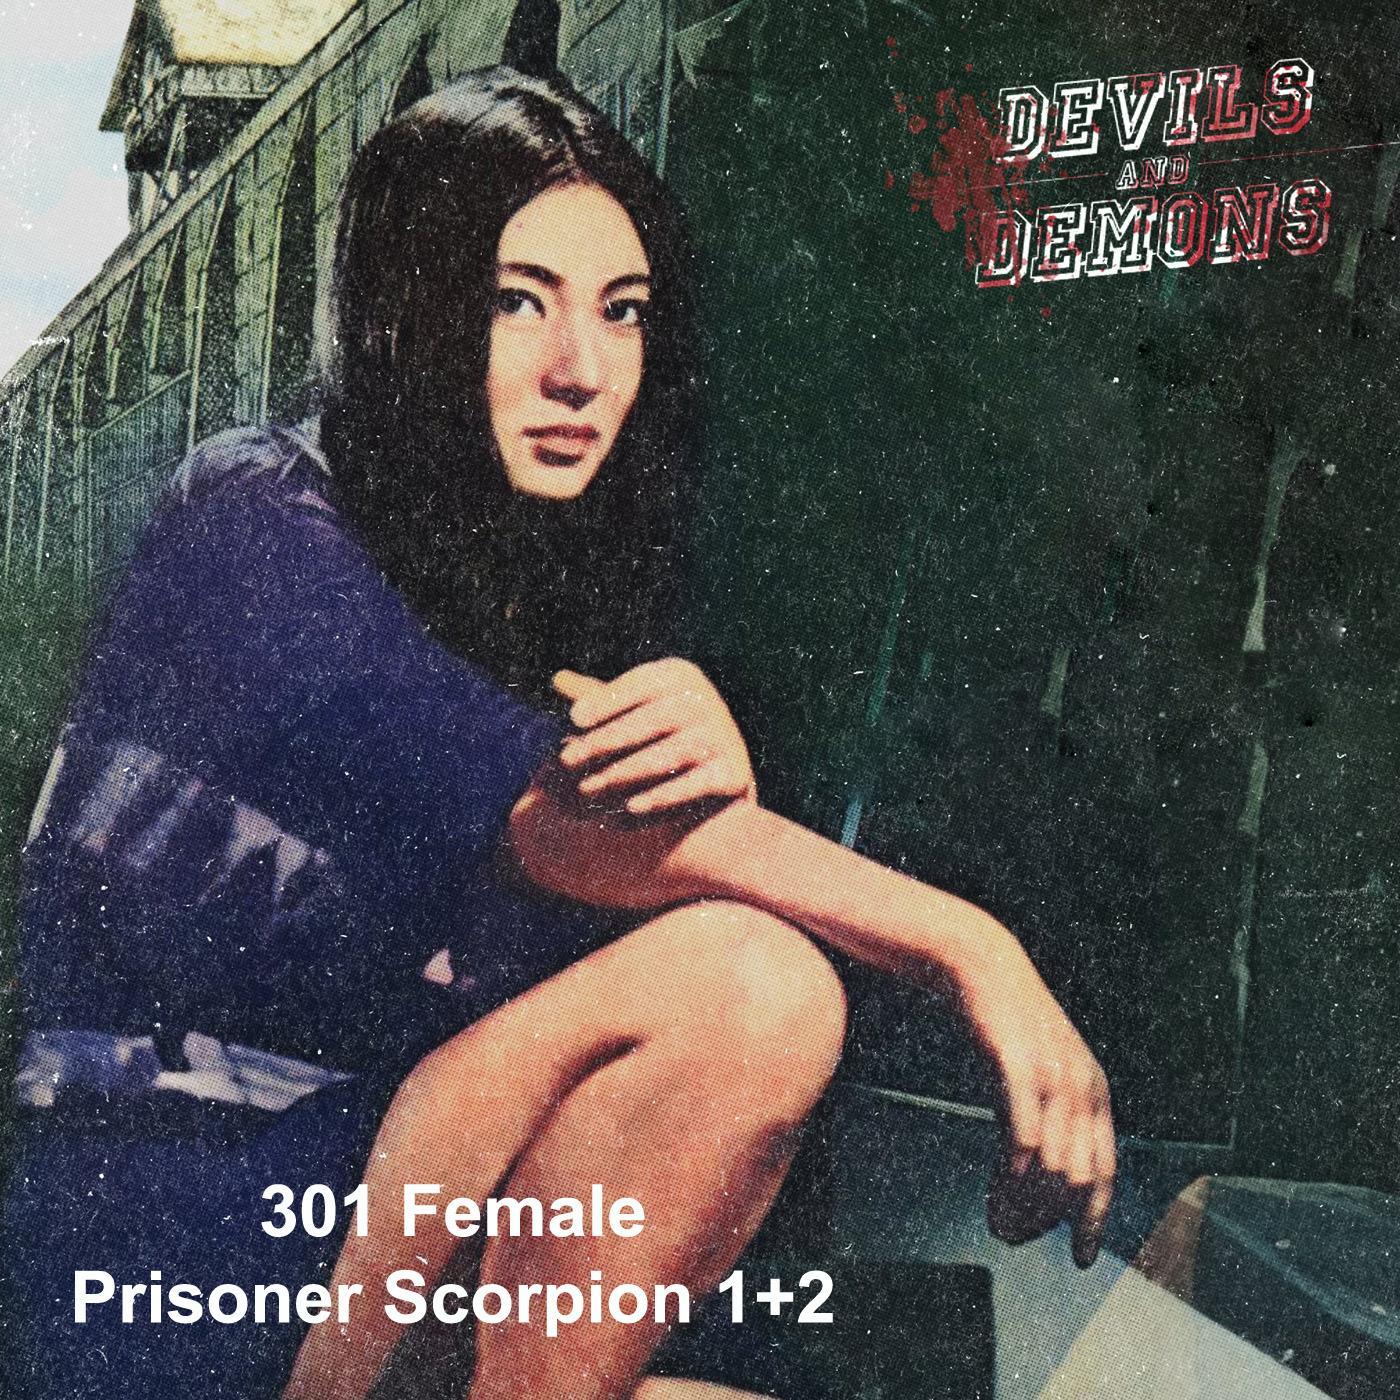 301 Female Prisoner Scorpion: #701/Jailhouse 41 (1972)